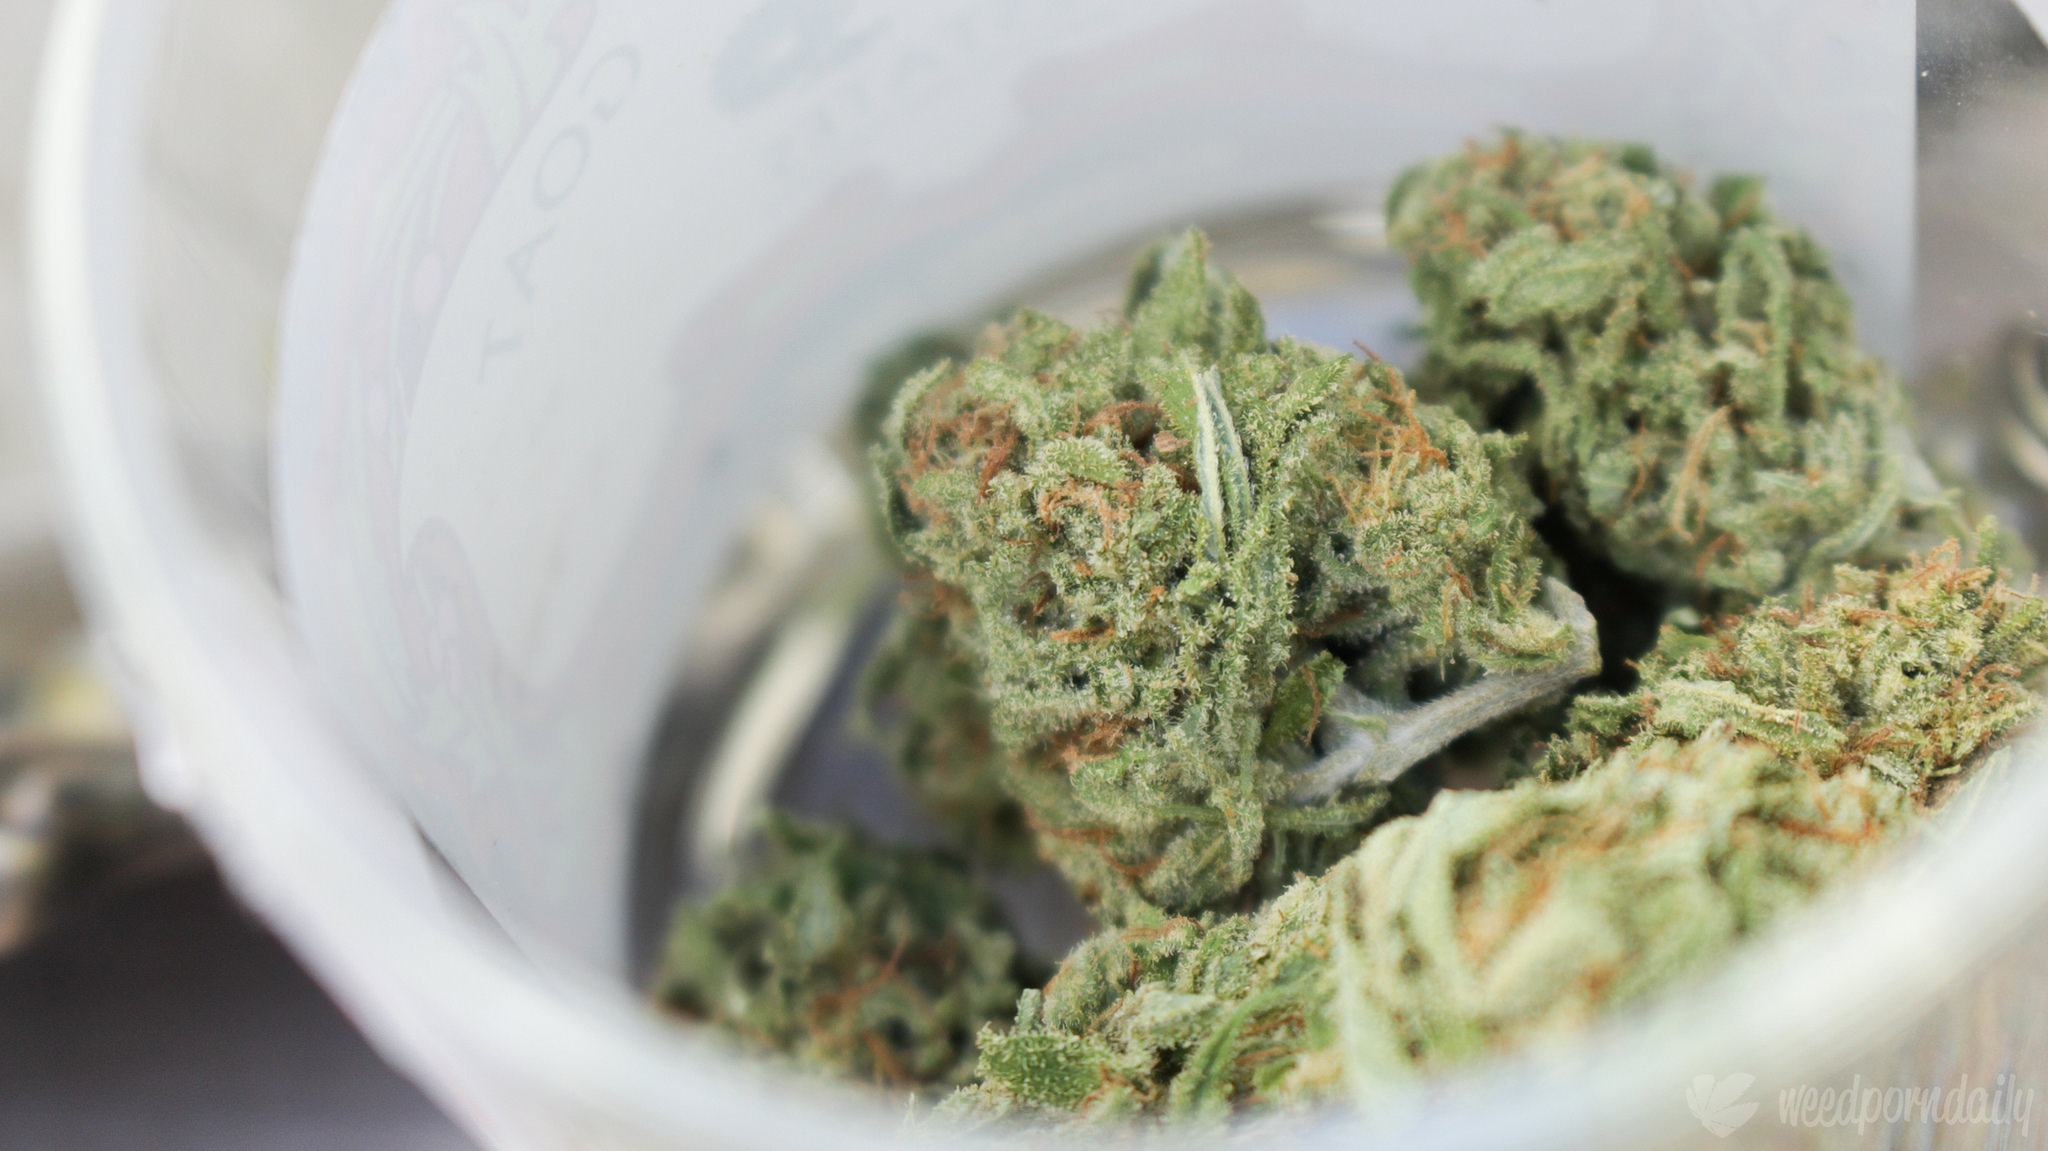 Nevada increased cannabis possession